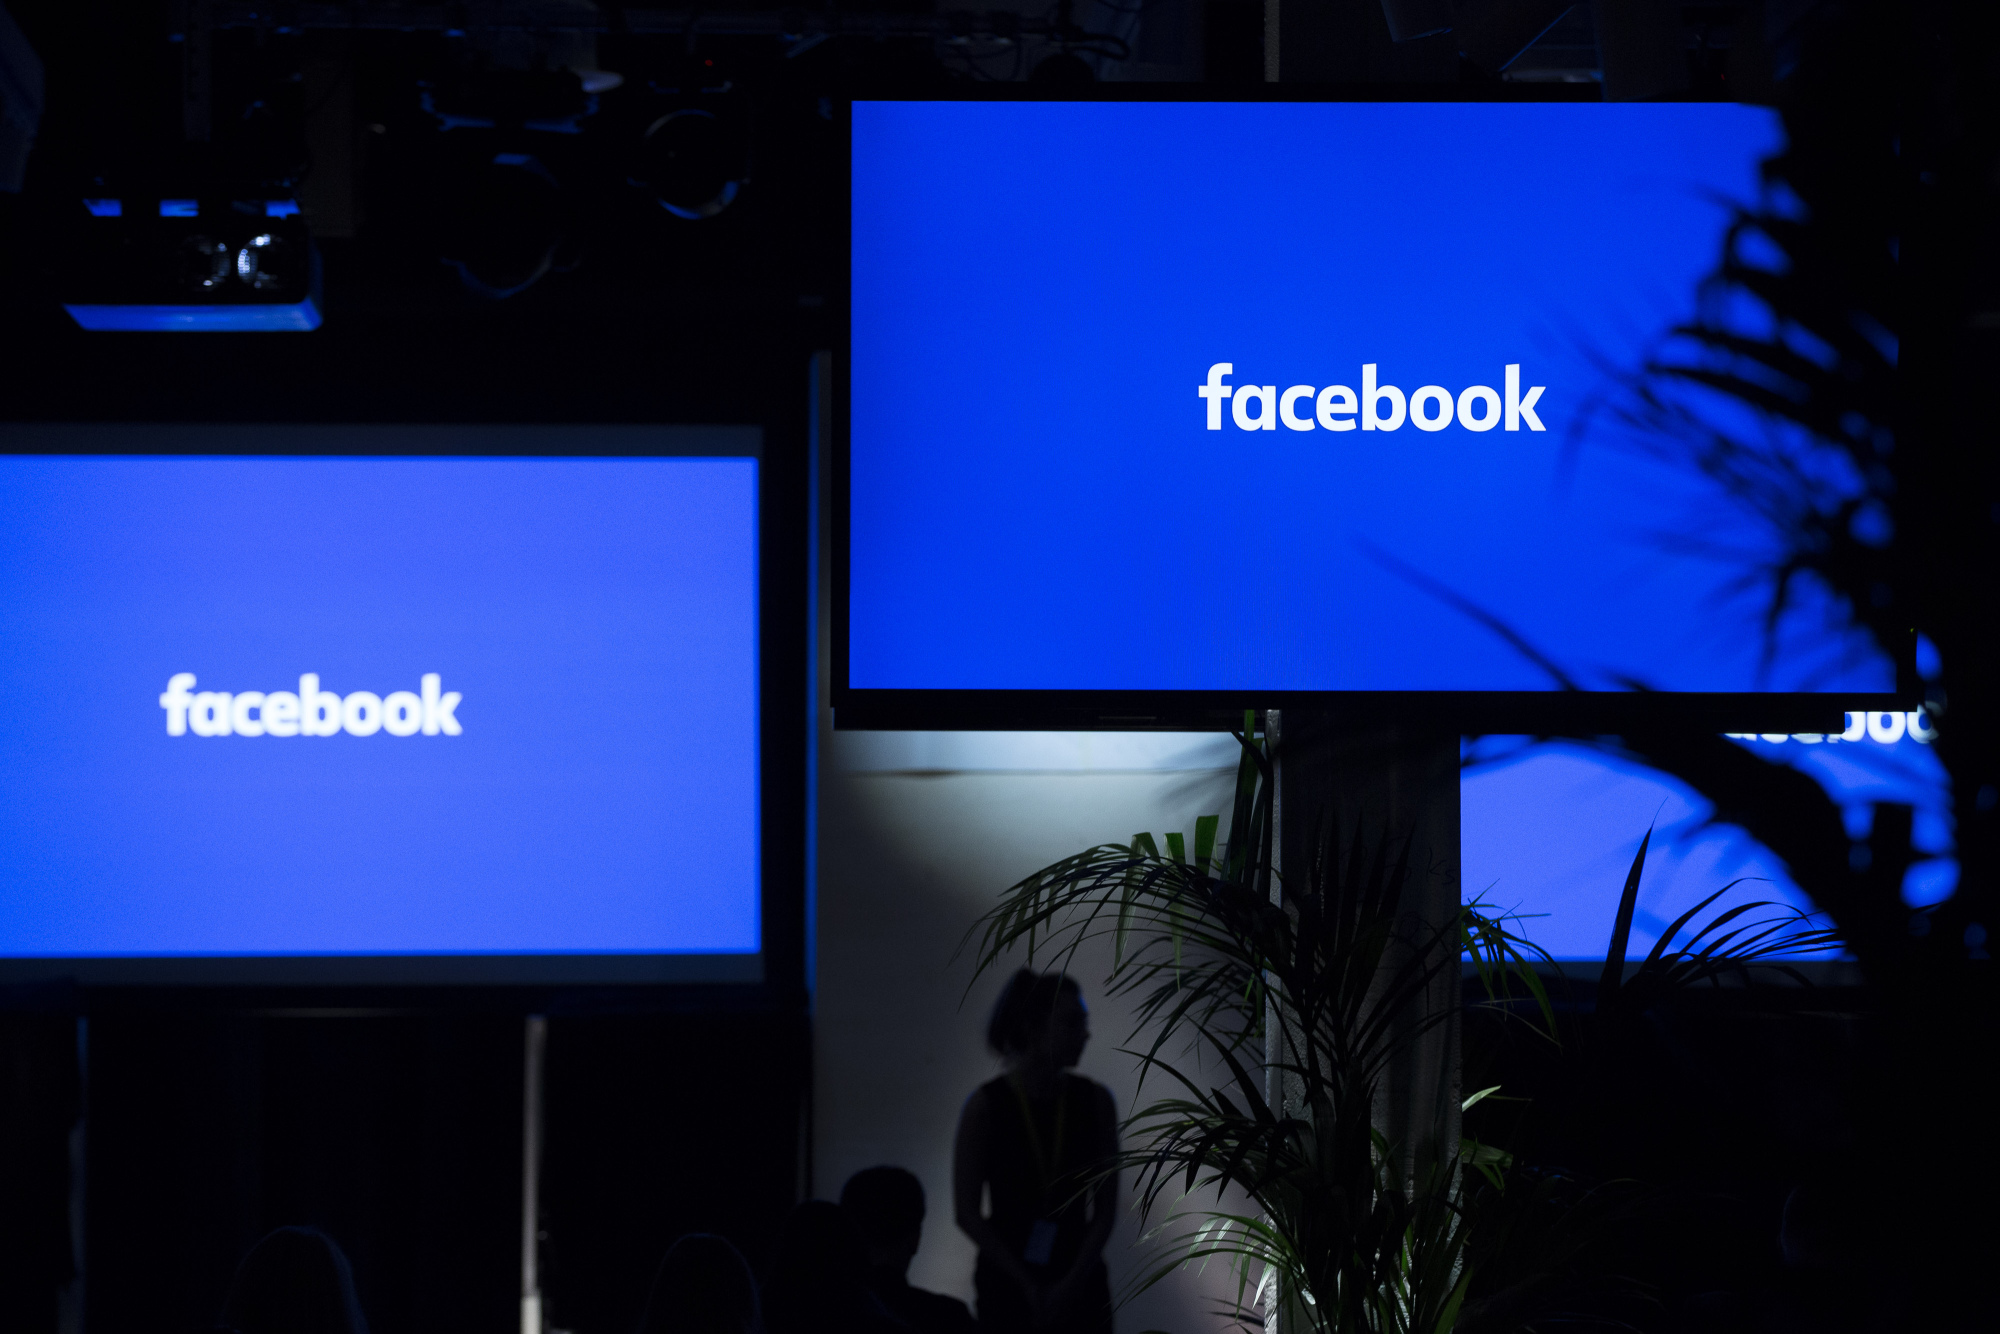 Facebook Inc. Launches Facebook At Work